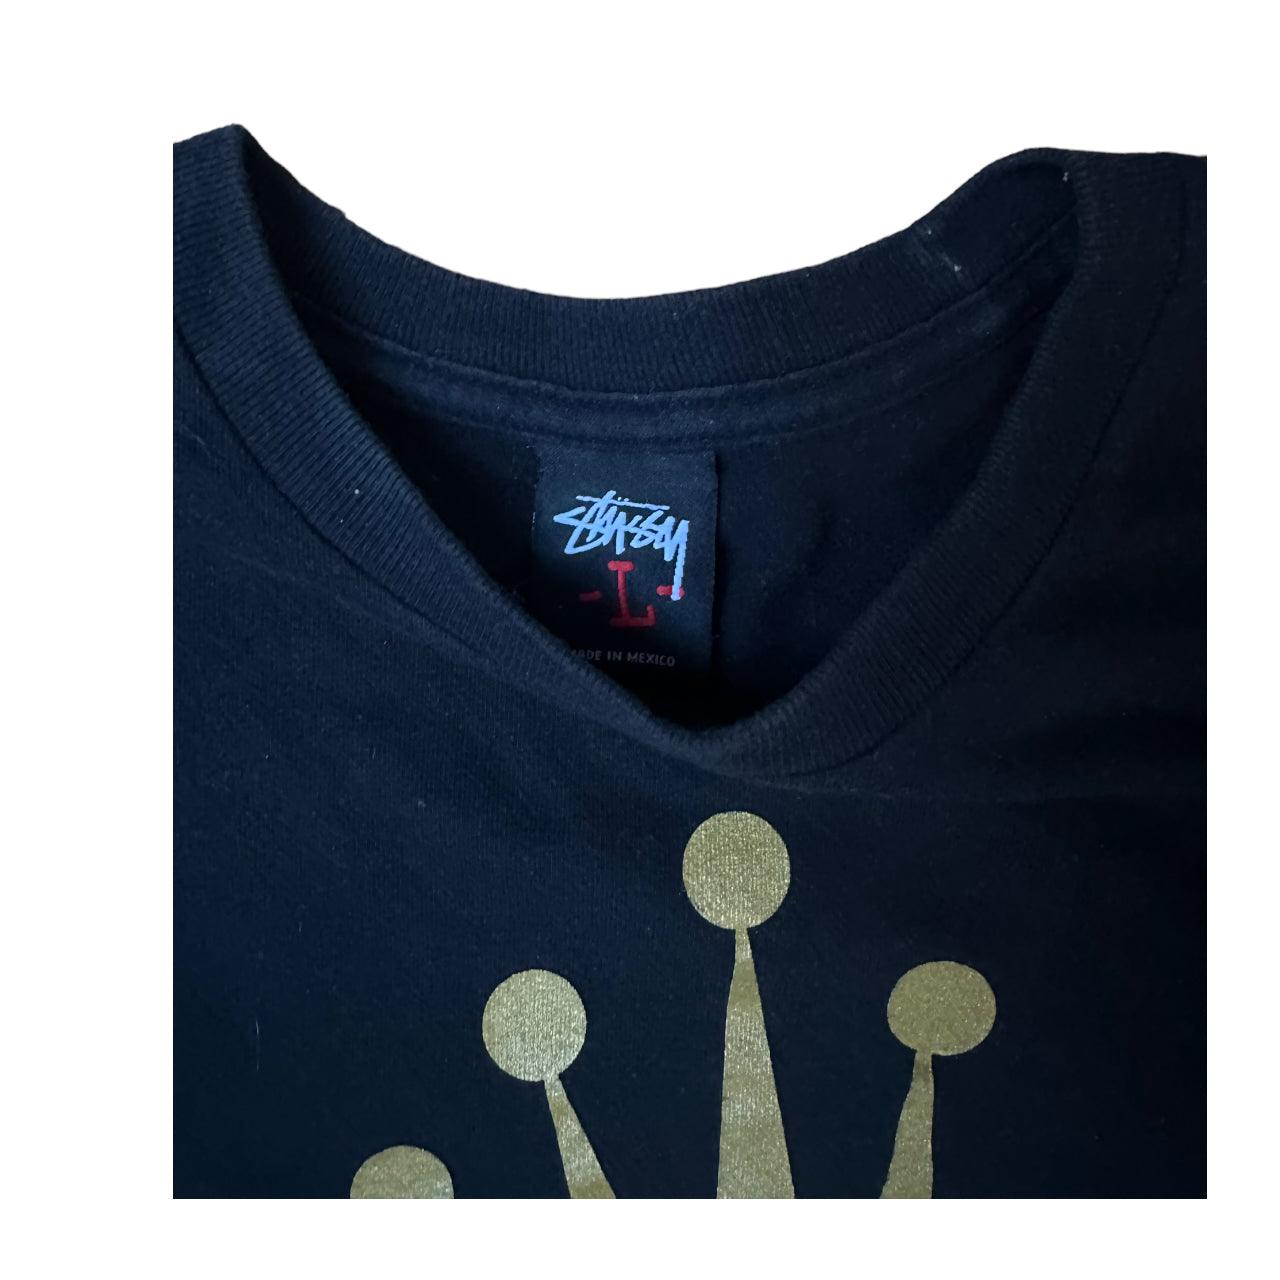 Stussy gold crown logo T-shirt - Known Source